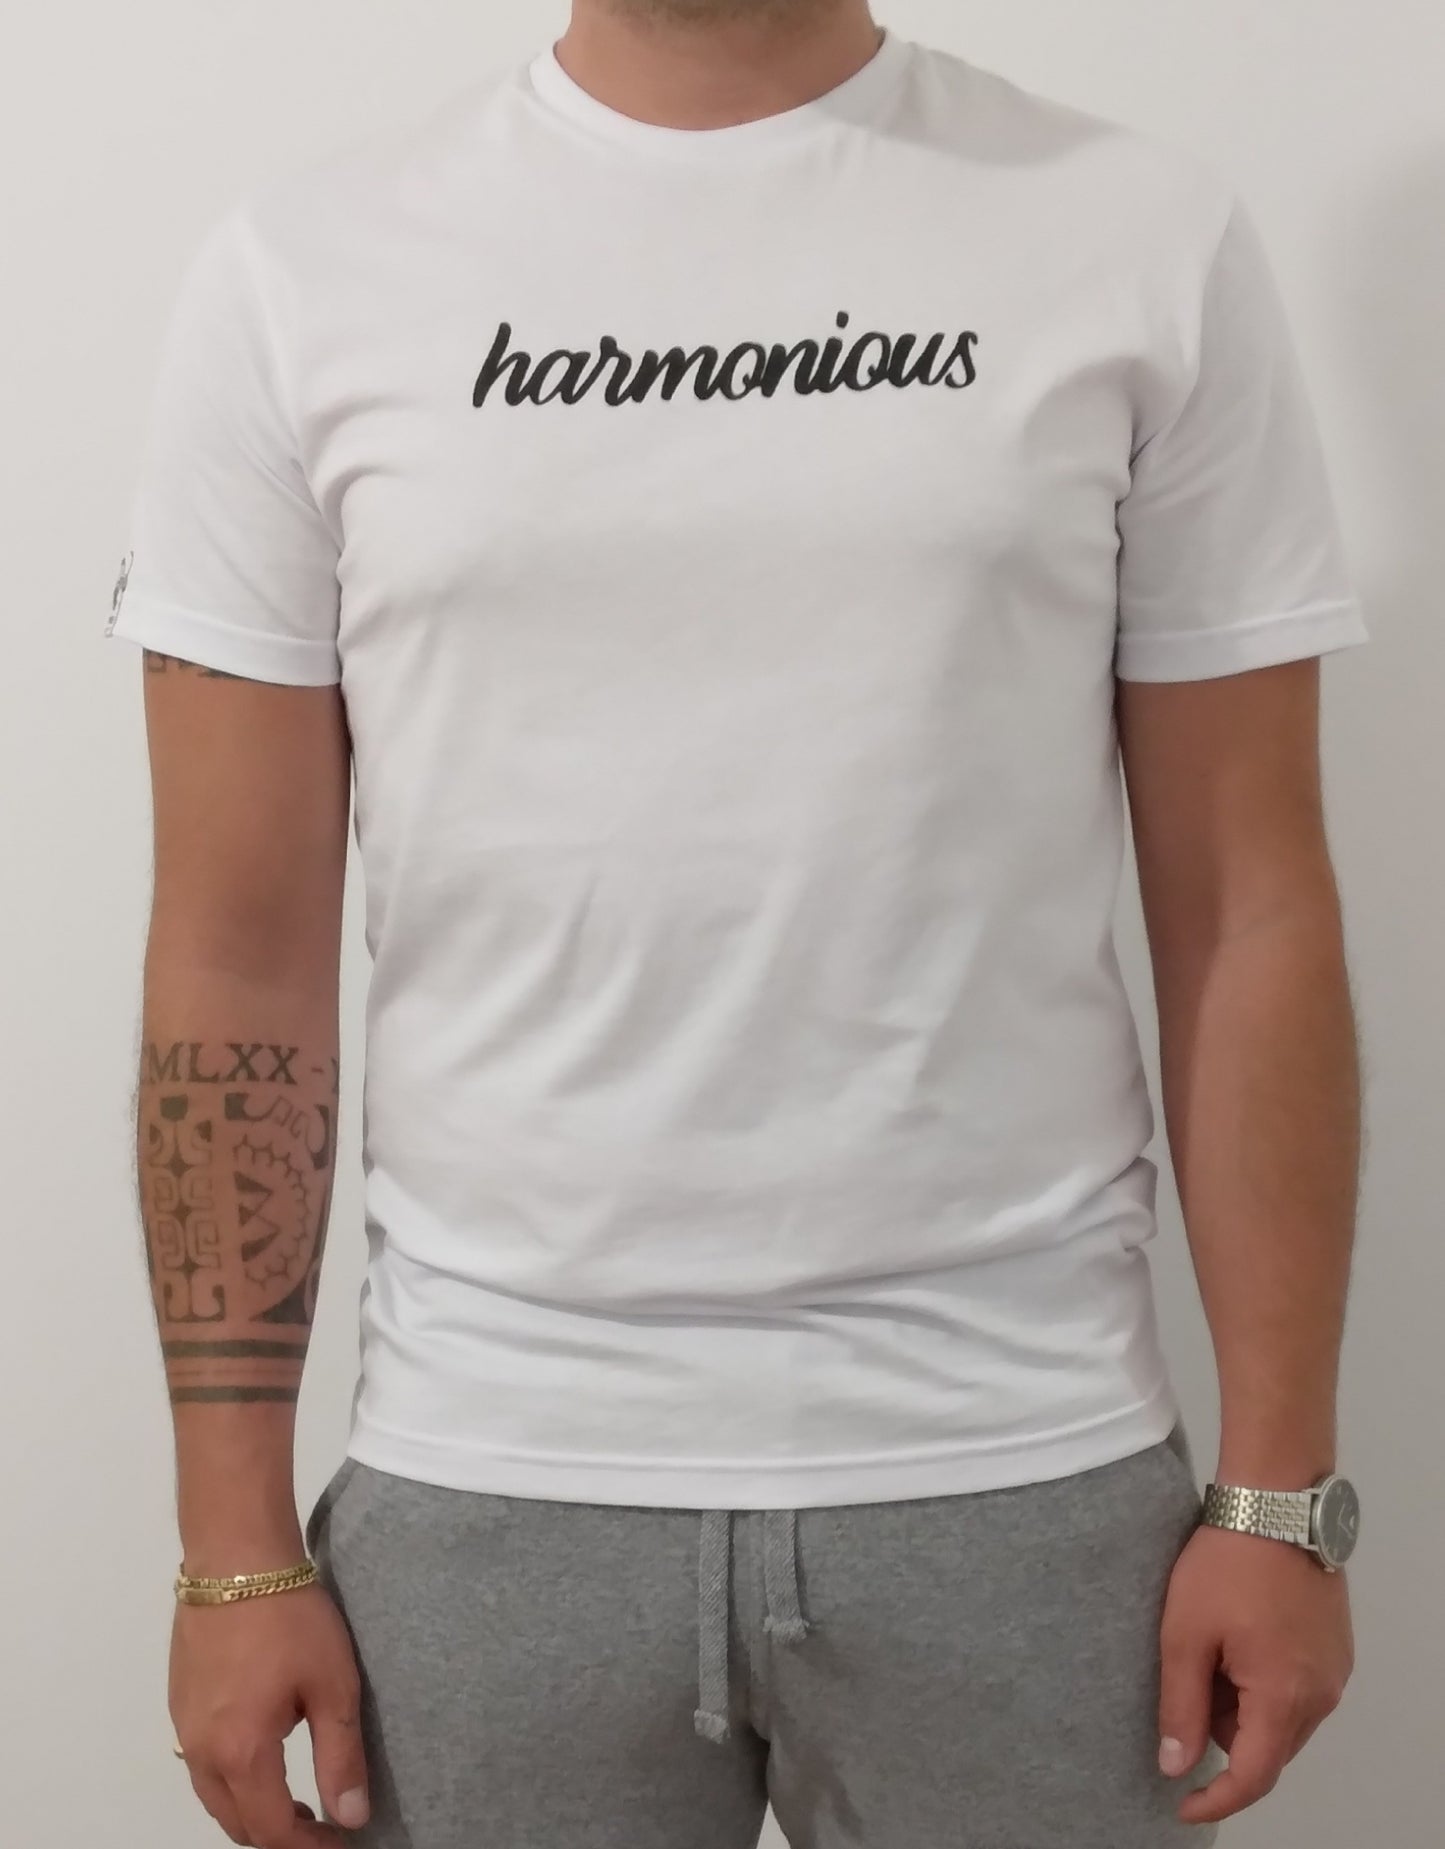 T-shirt uomo Harmonious 100% Made in Italy